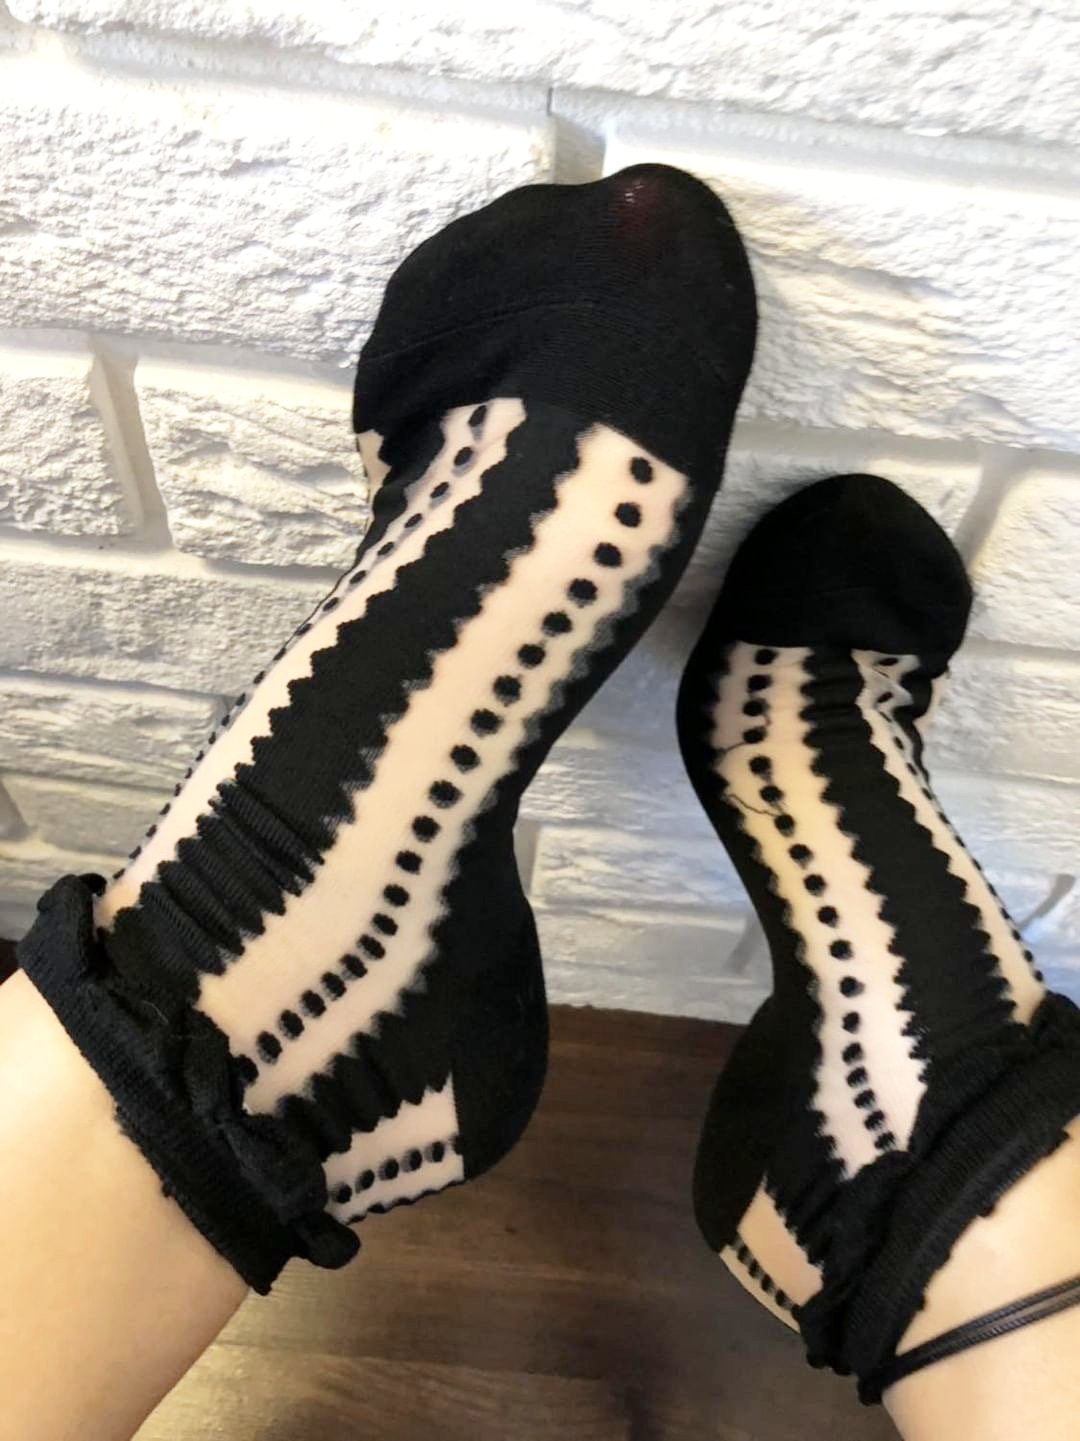 Stripy Dotty Black Sheer Socks - Global Trendz Fashion®